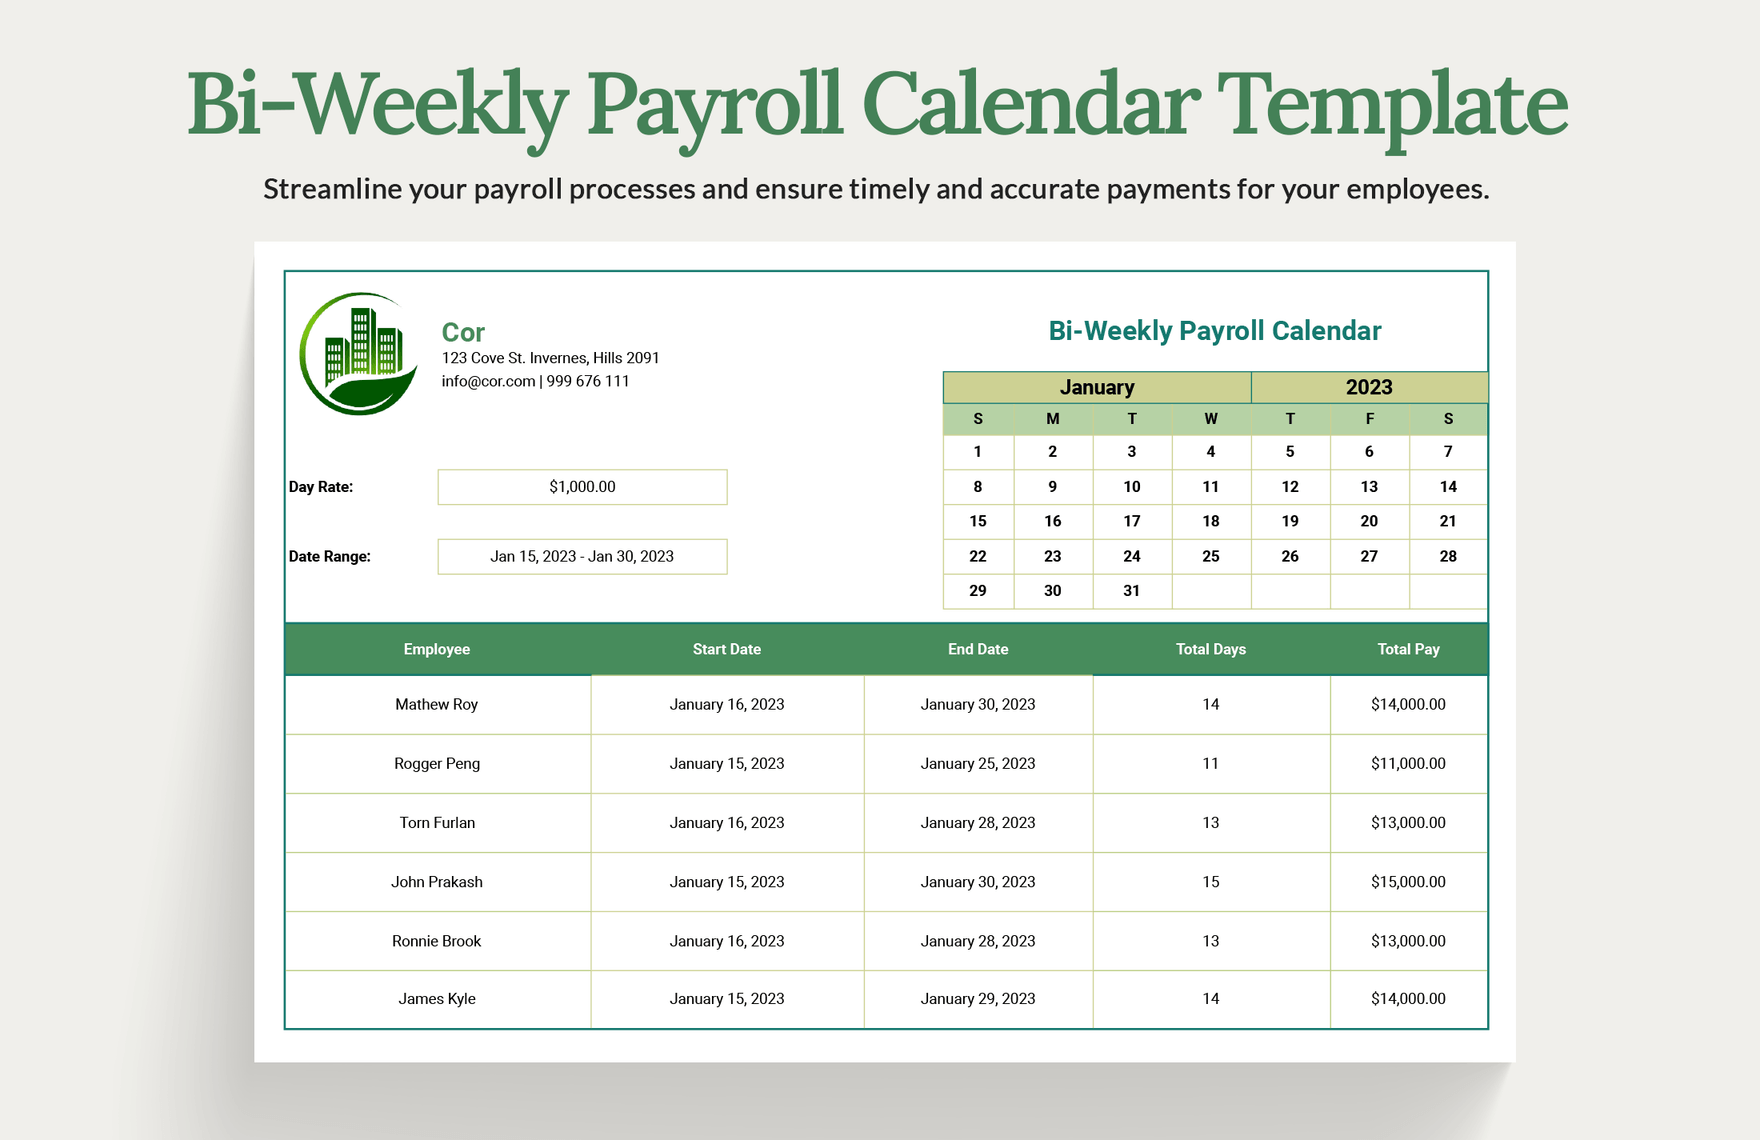 BiWeekly Payroll Calendar Template Download in Word, Google Docs